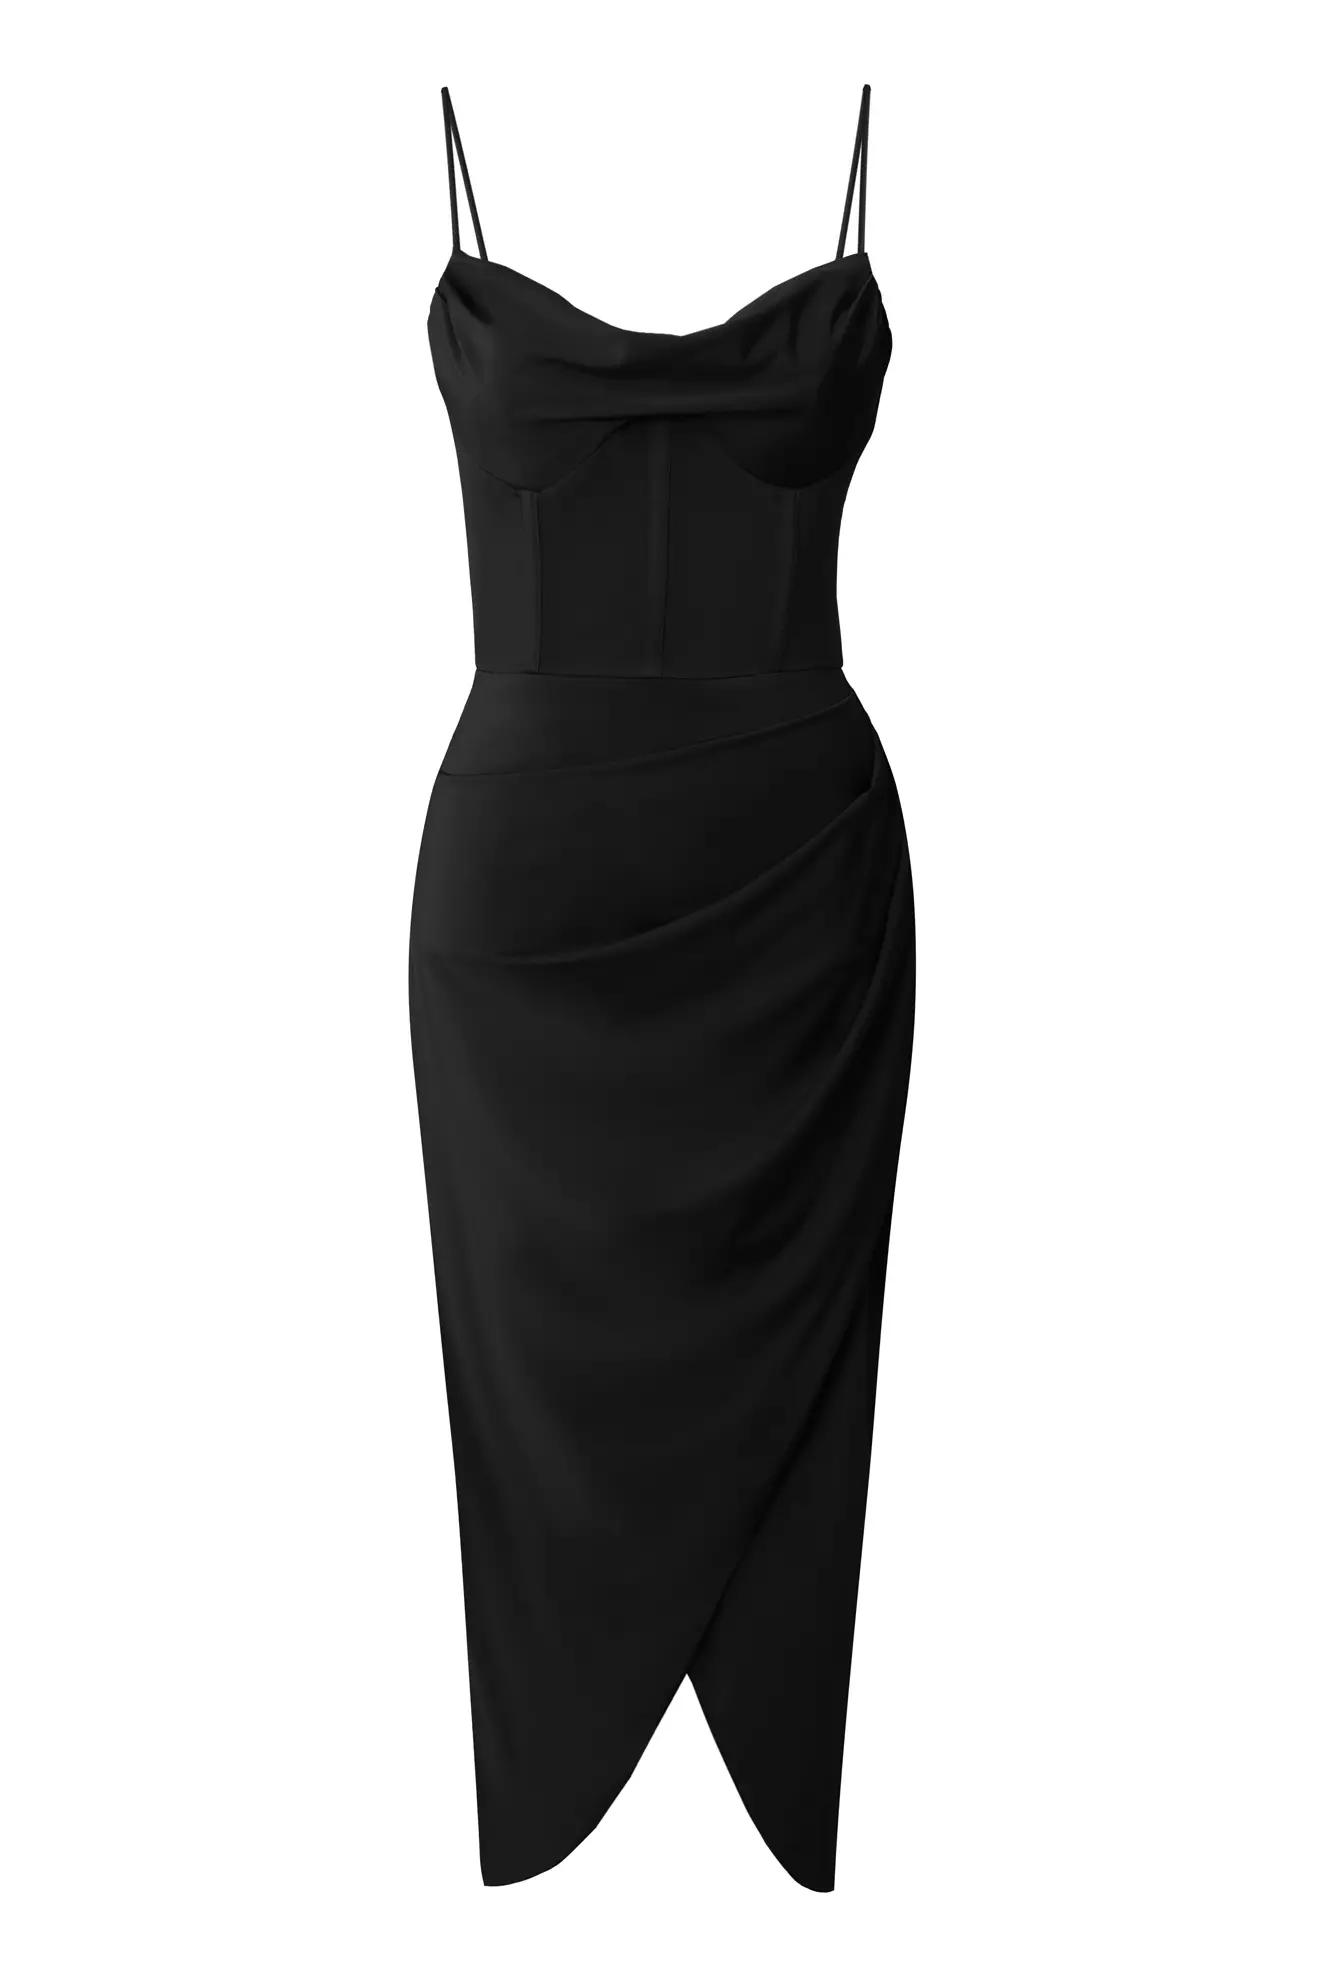 Black sendy sleeveless long dress